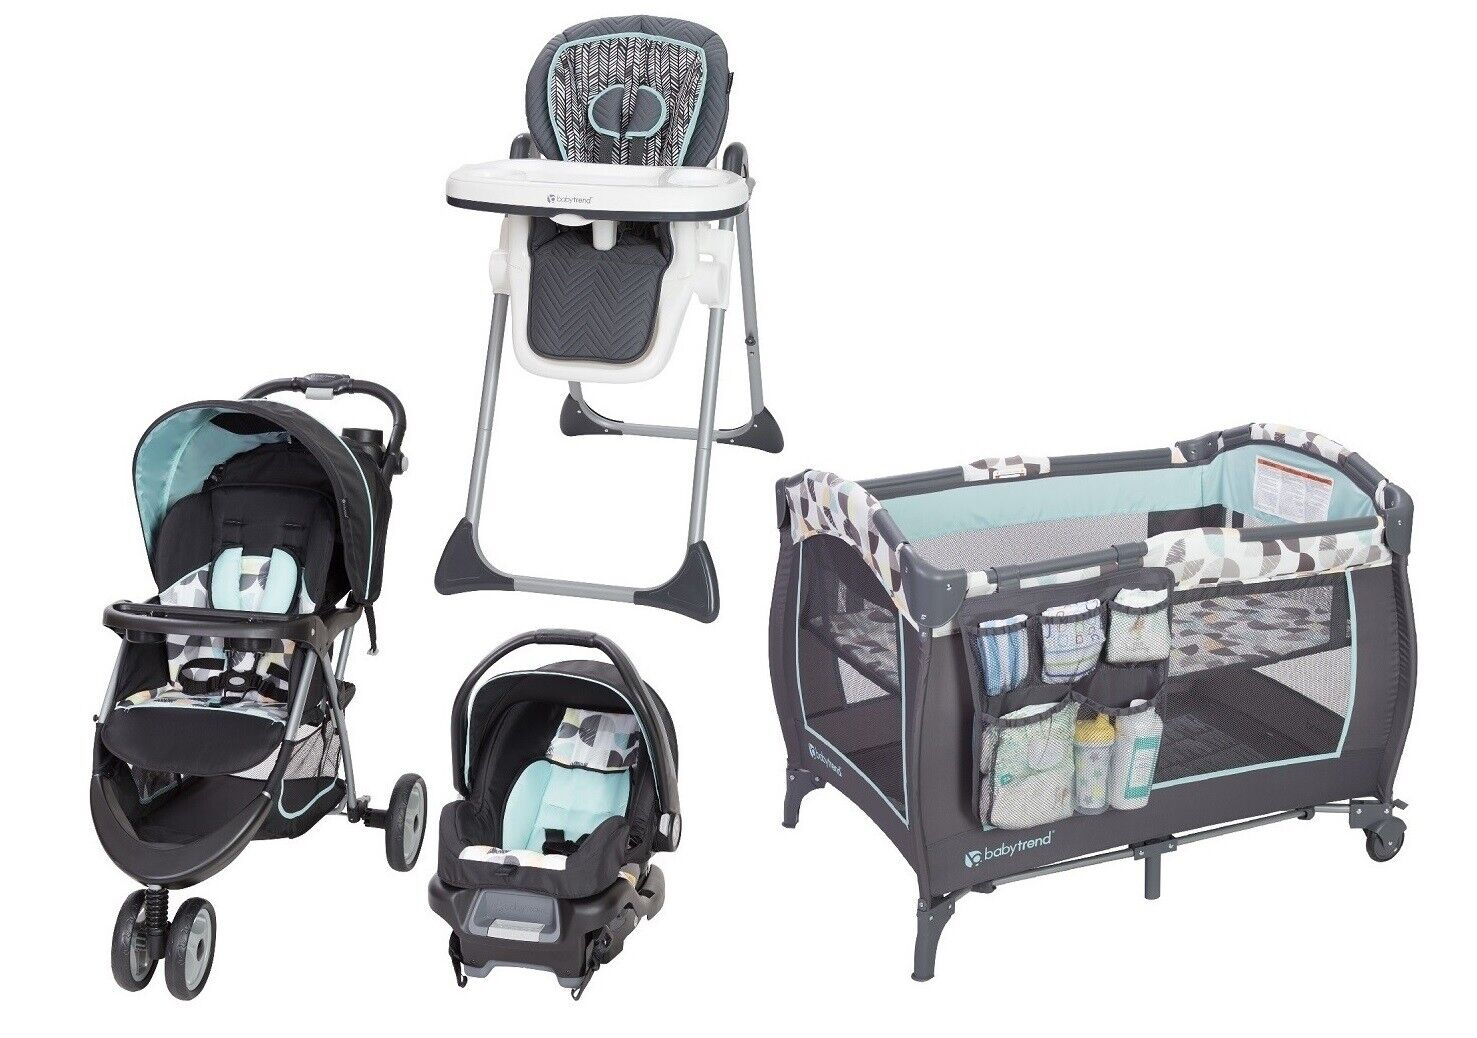 Car Seat Nursery Crib Playard Chair Swing, Stroller Car Seat Pack And Play Combo